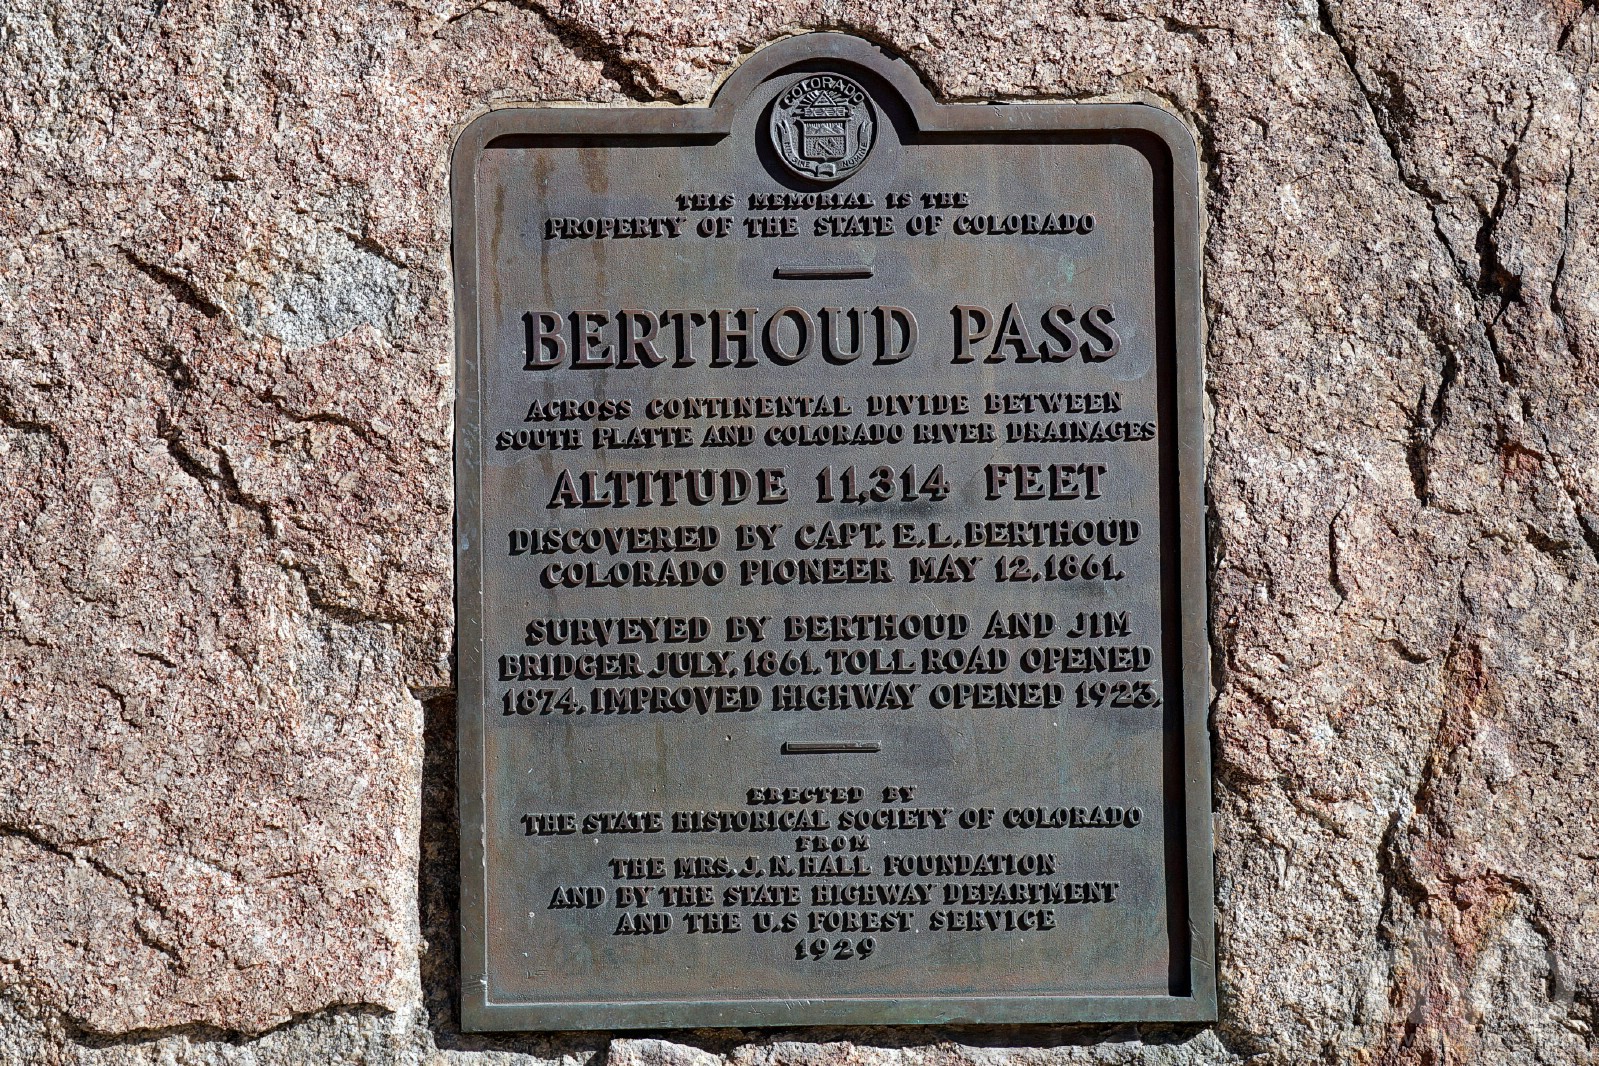 Berthoud Pass, north-central Colorado, USA. September 13, 2016.